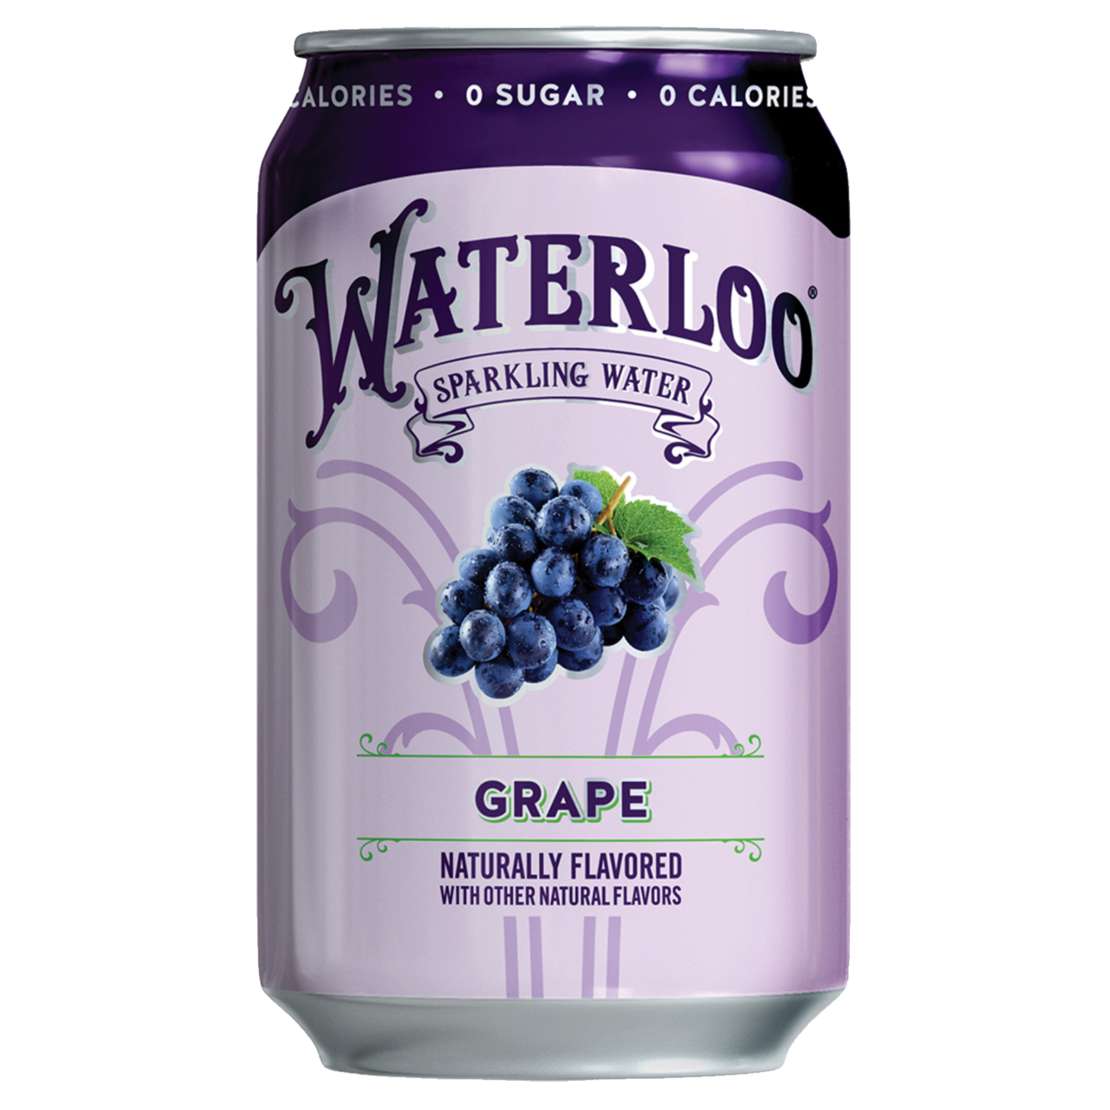 Waterloo sparkling water grape